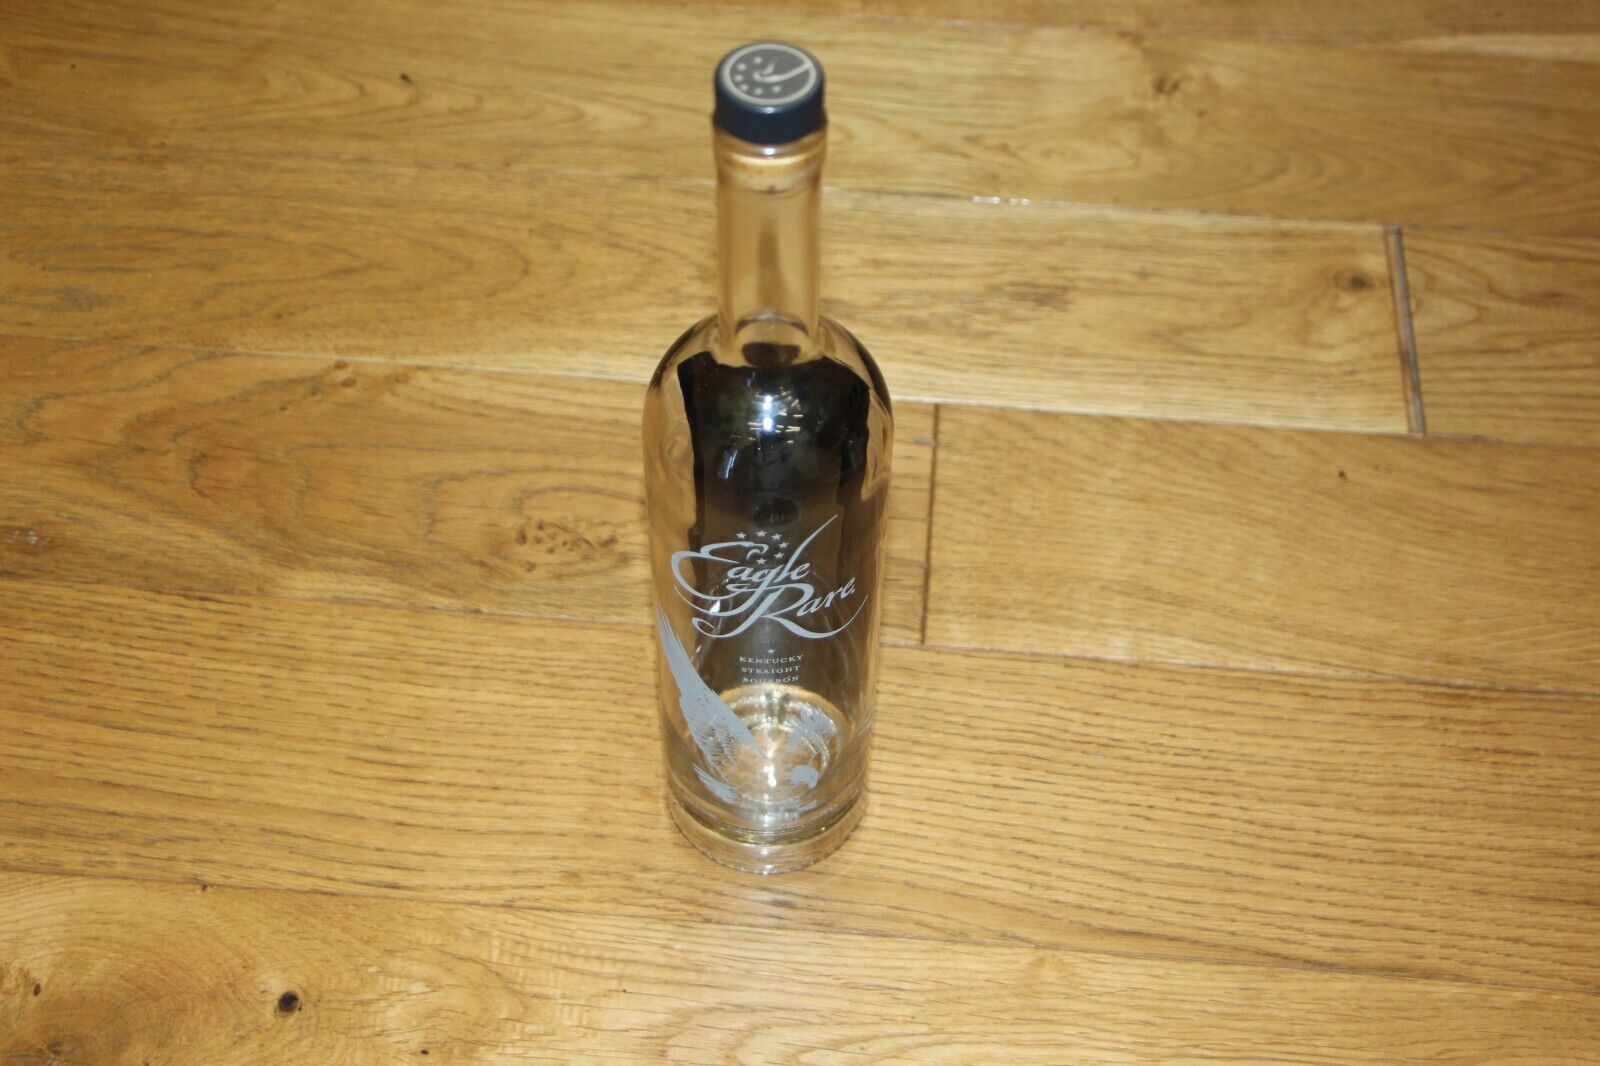 Eagle Rare 10 year Kentucky Straight Bourbon Whiskey empty bottle